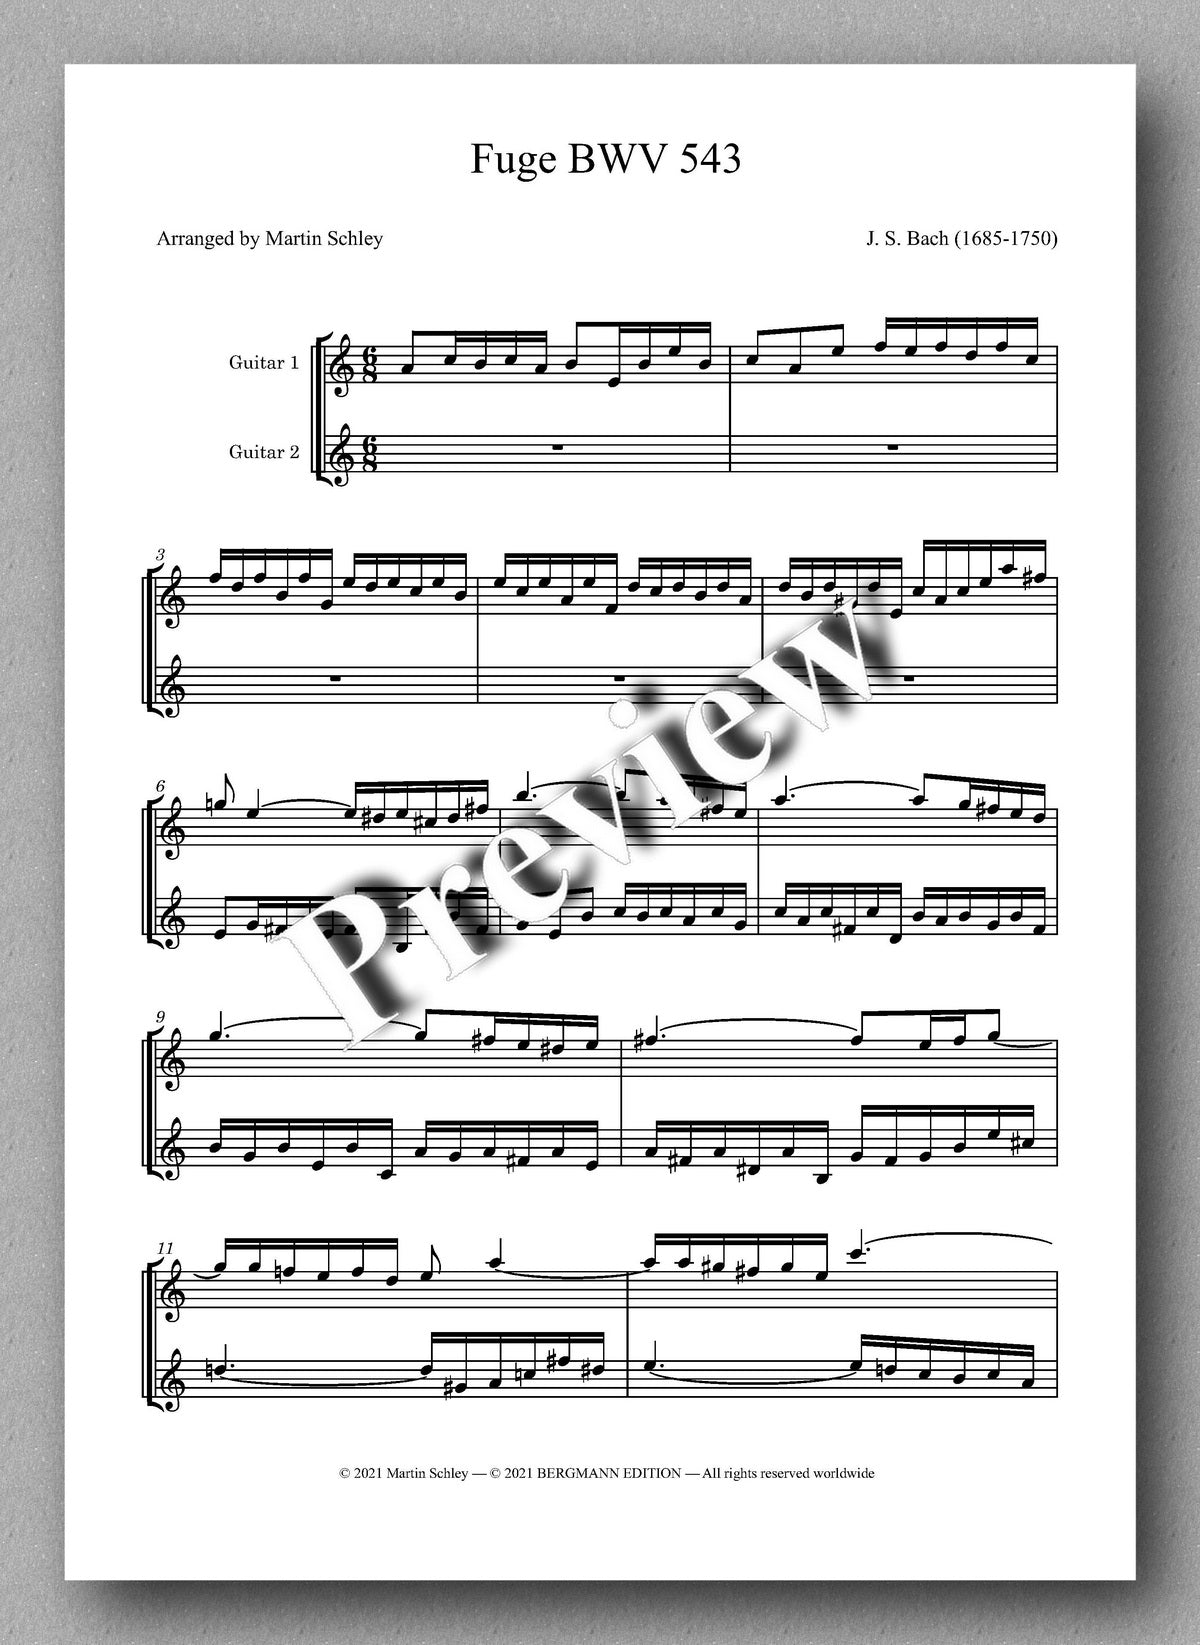 J.S. Bach, Prelude, Fugue BWV 543 - music score 1